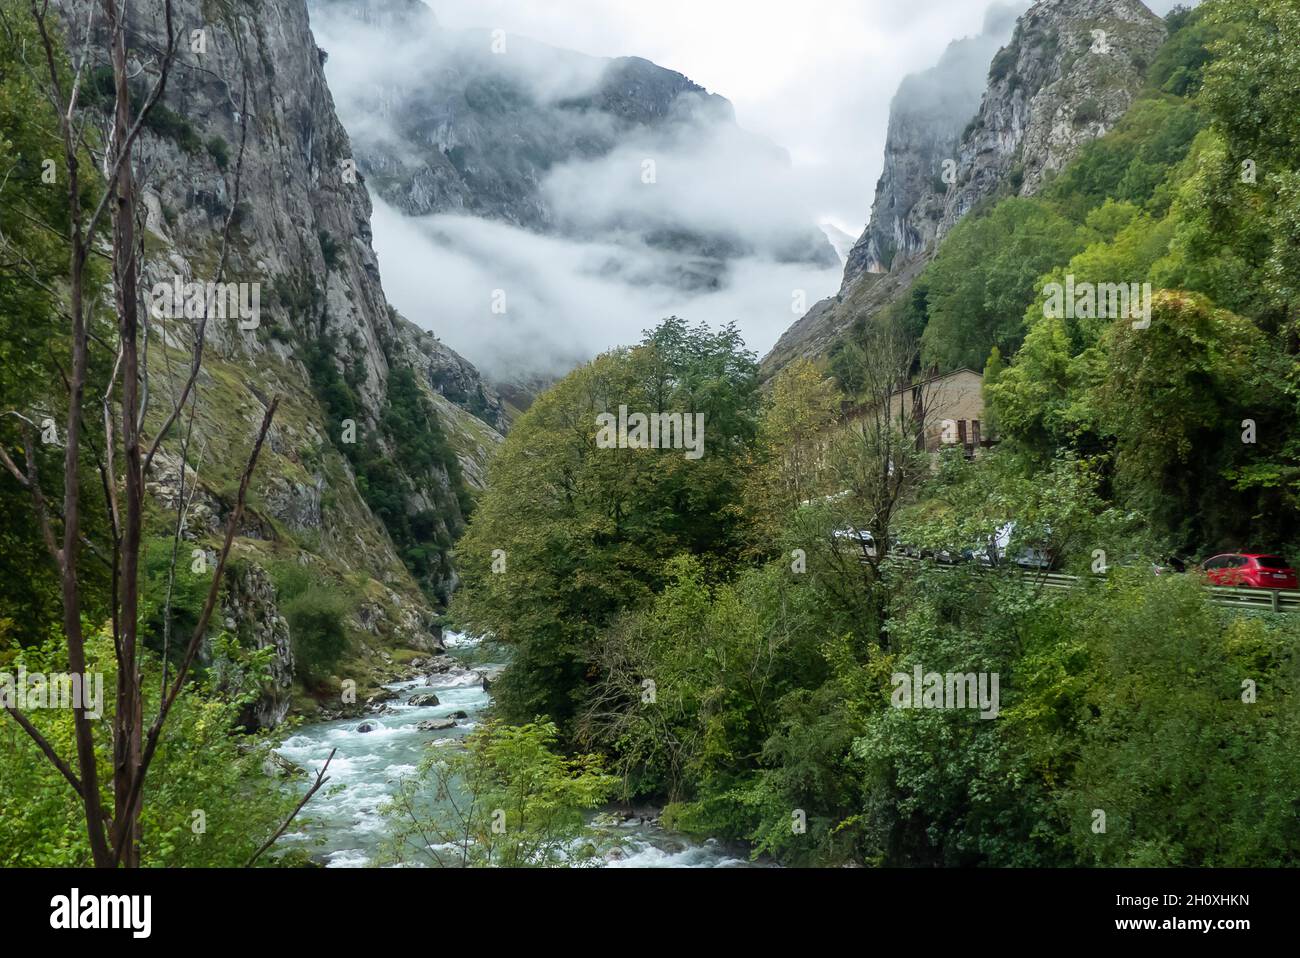 Asturias in Spain: The Ruta de Cares and the Rio Cares gorge. Stock Photo